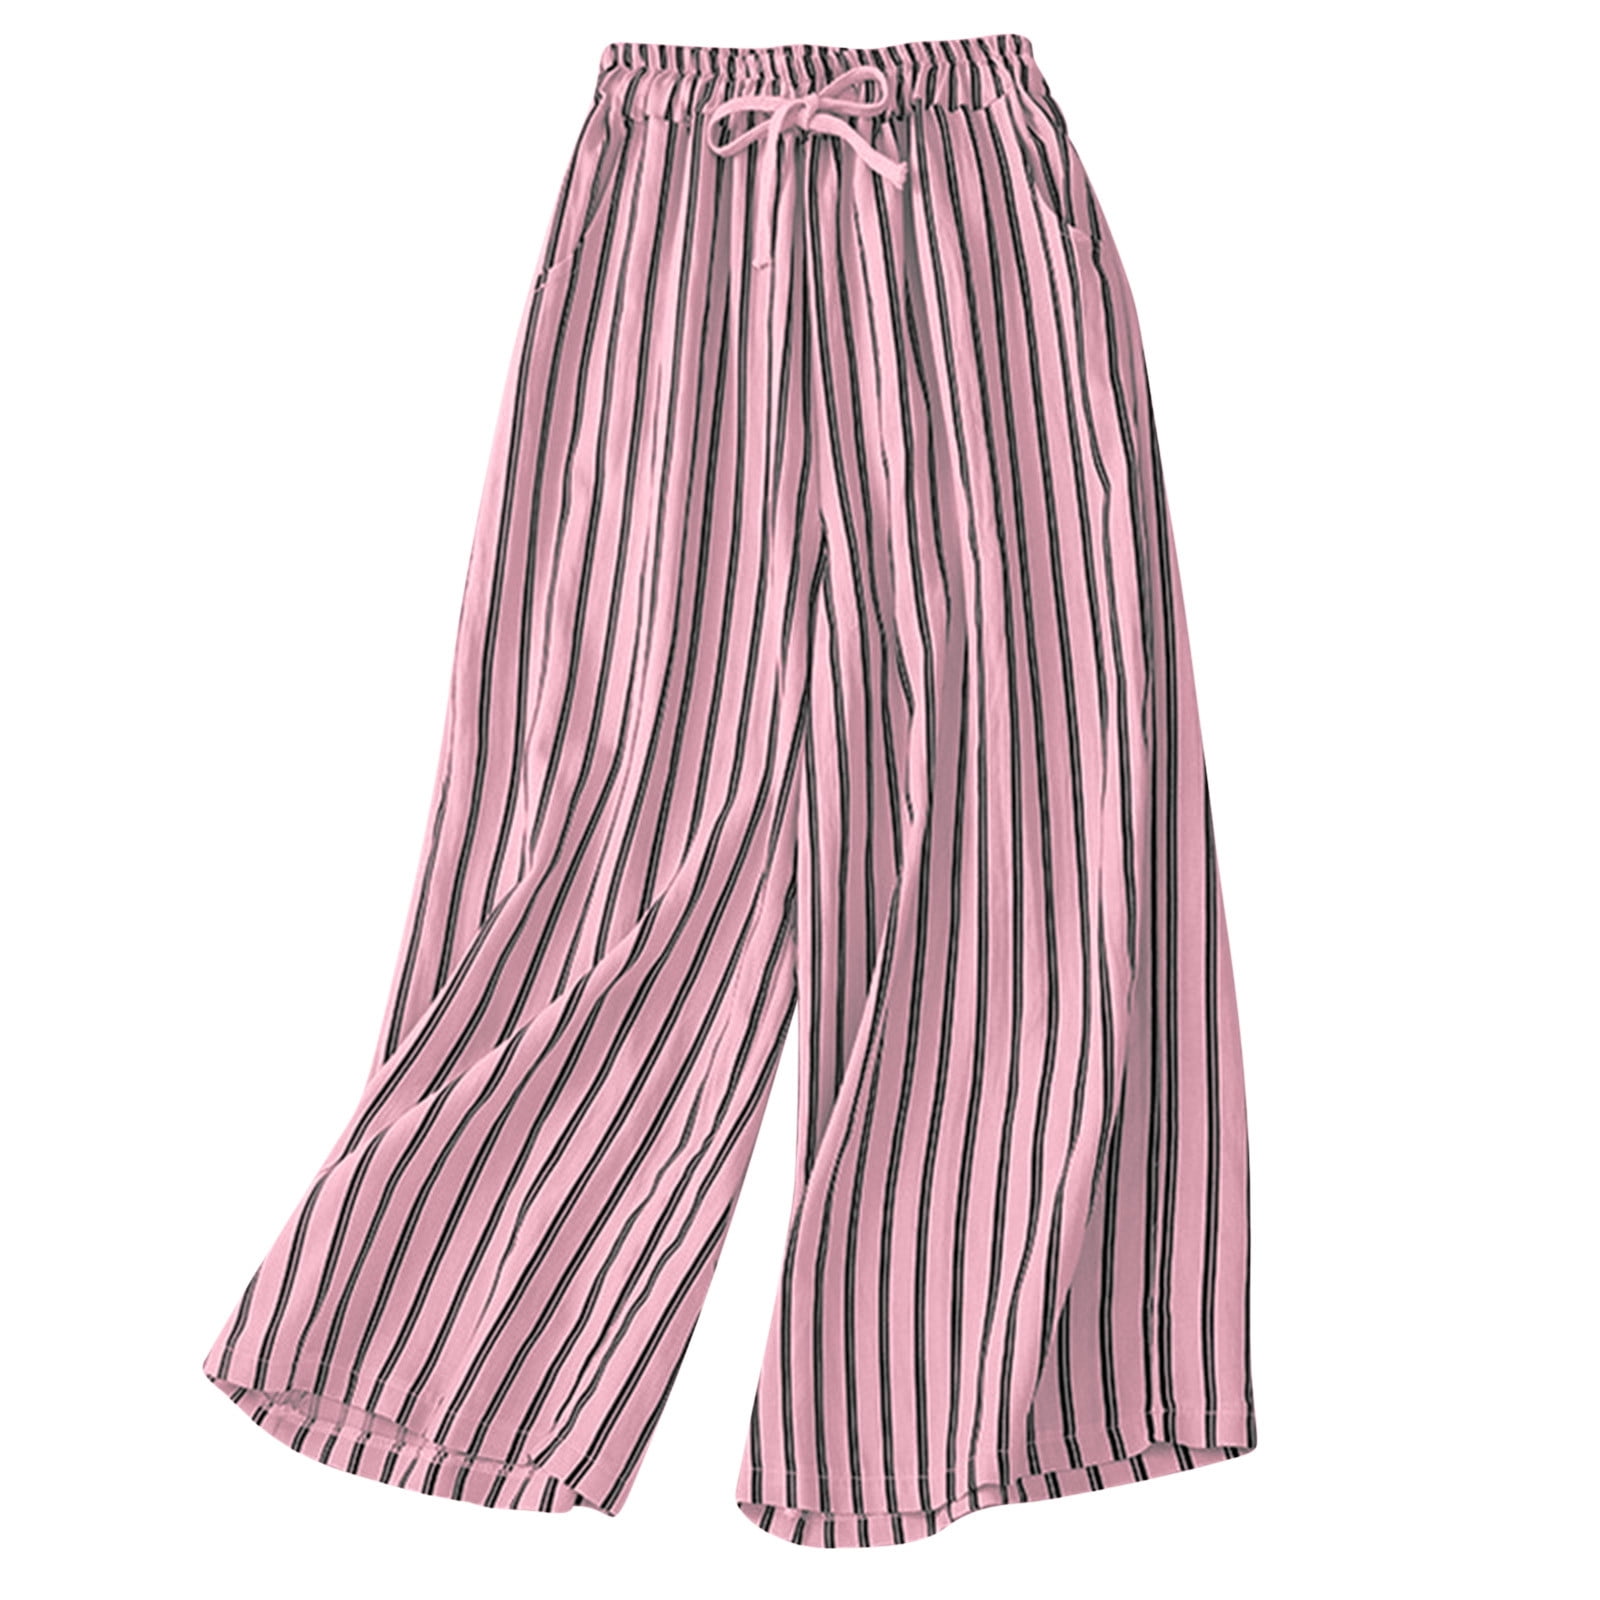 Wide Leg Pants for Women Cotton Linen Plus Size Stripes Elastic Waist  Lightweight Summer Casual Loose Beach Pants 